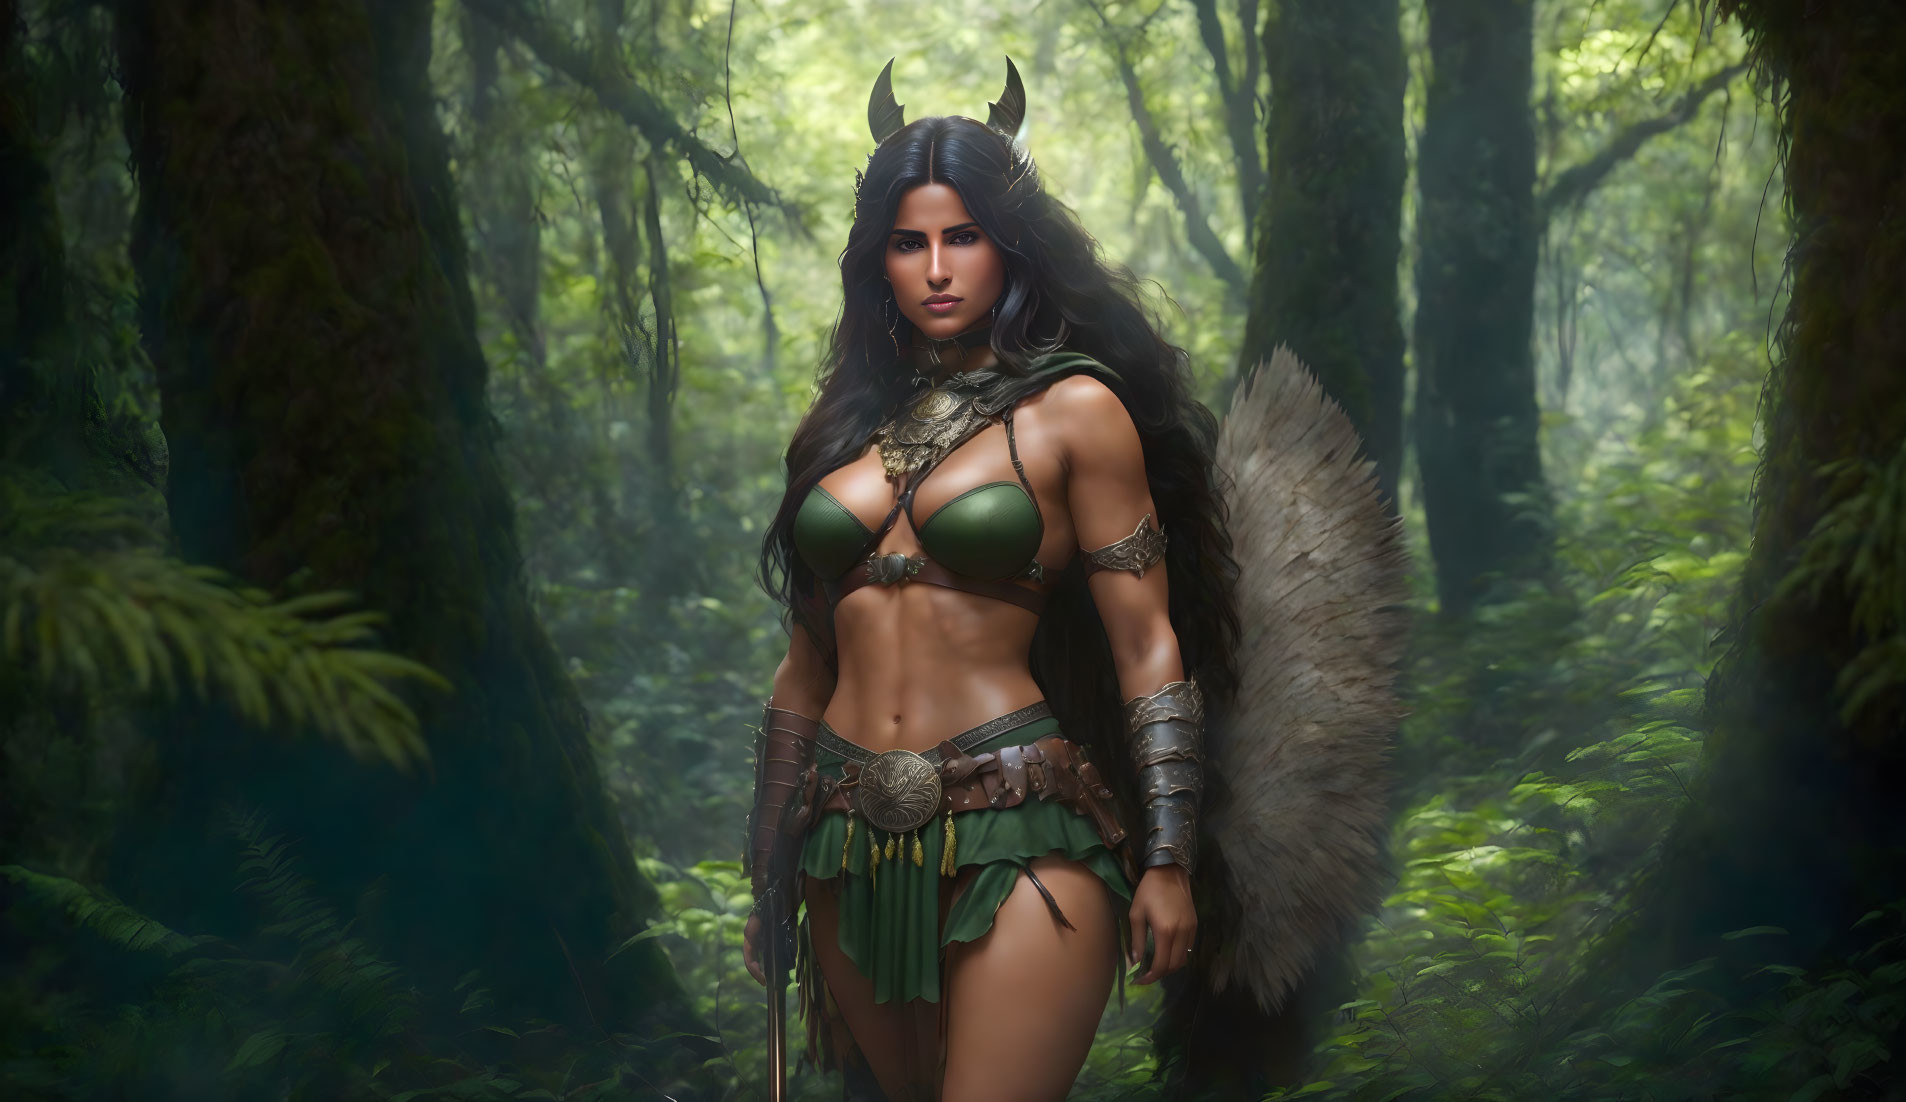 Sexy and beautiful jungle warrior woman